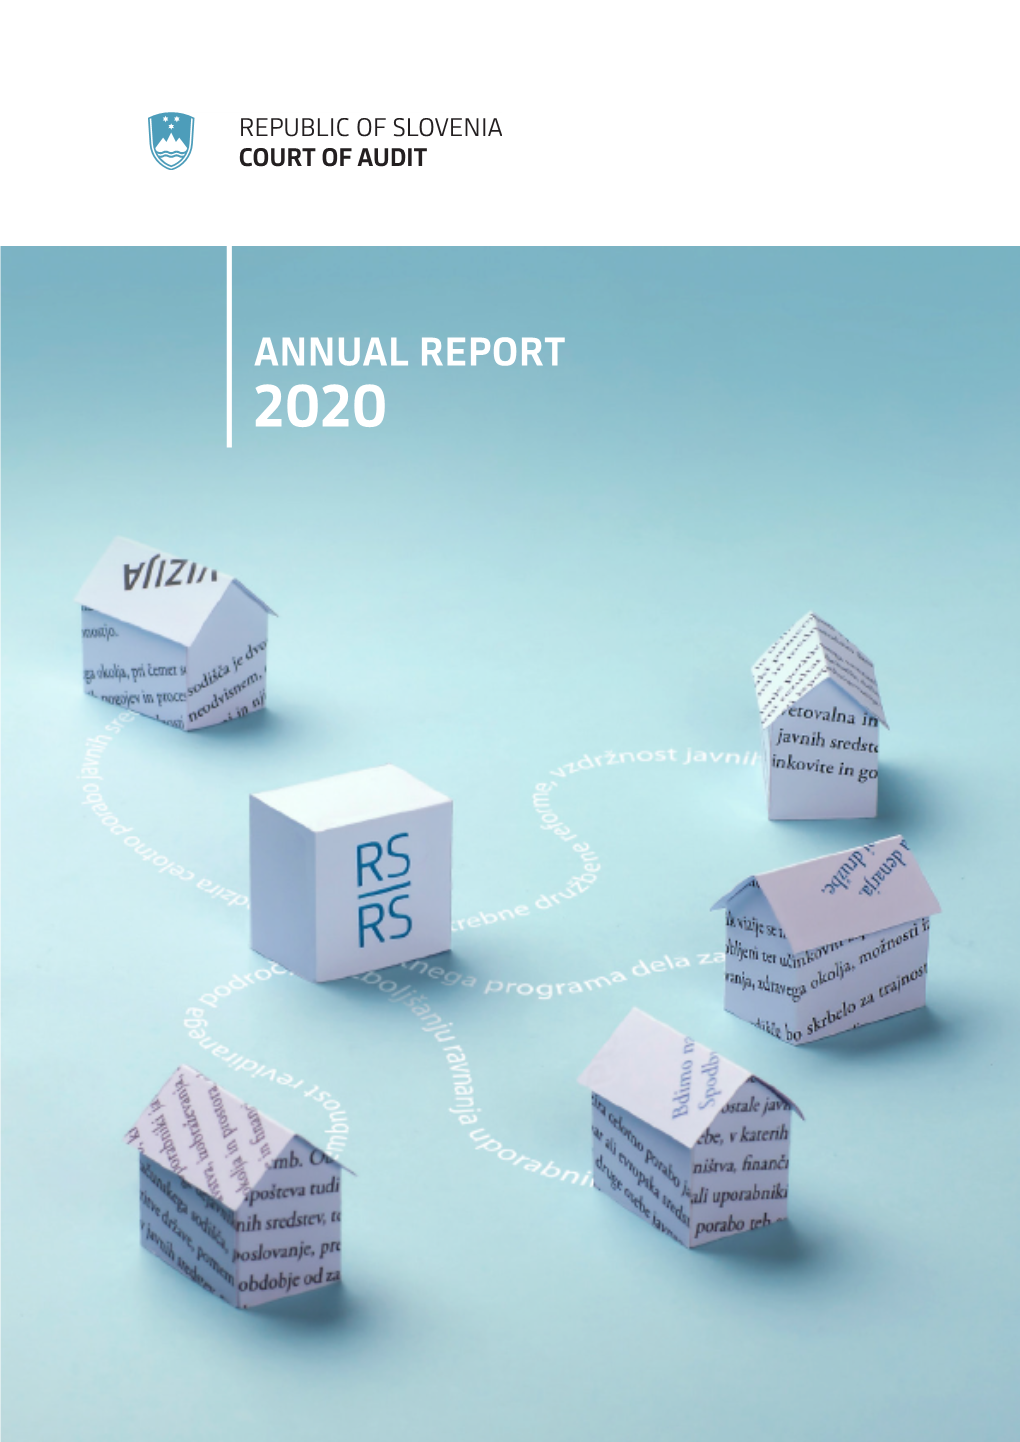 Annual Report 2020 Mission